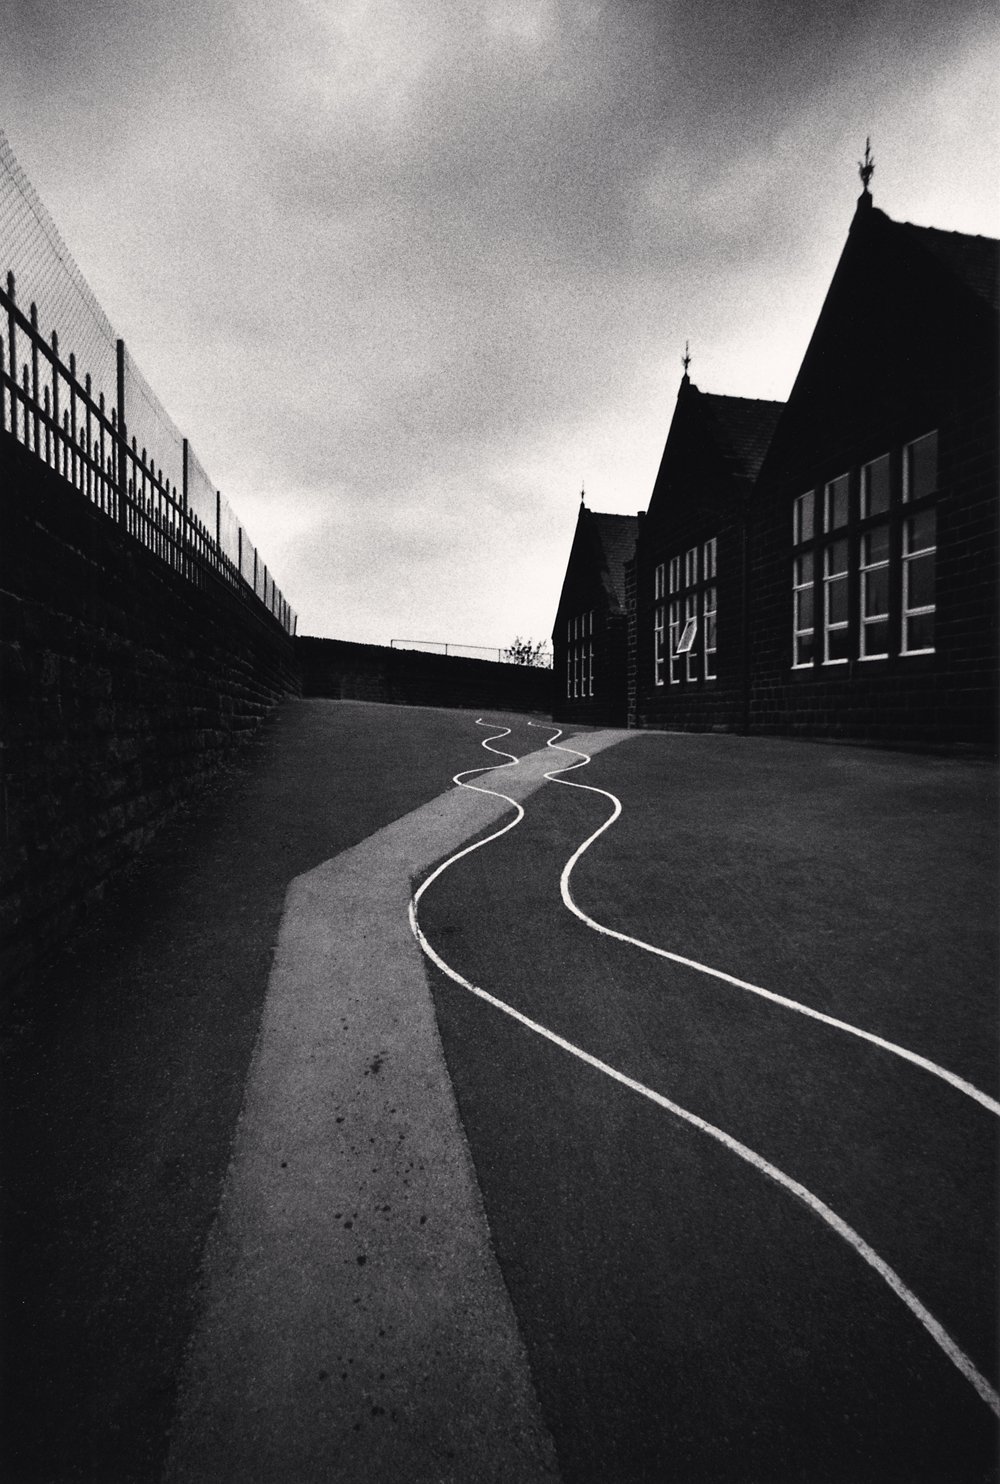 School Yard, Heptonstall, West Yorkshire, England. 1983